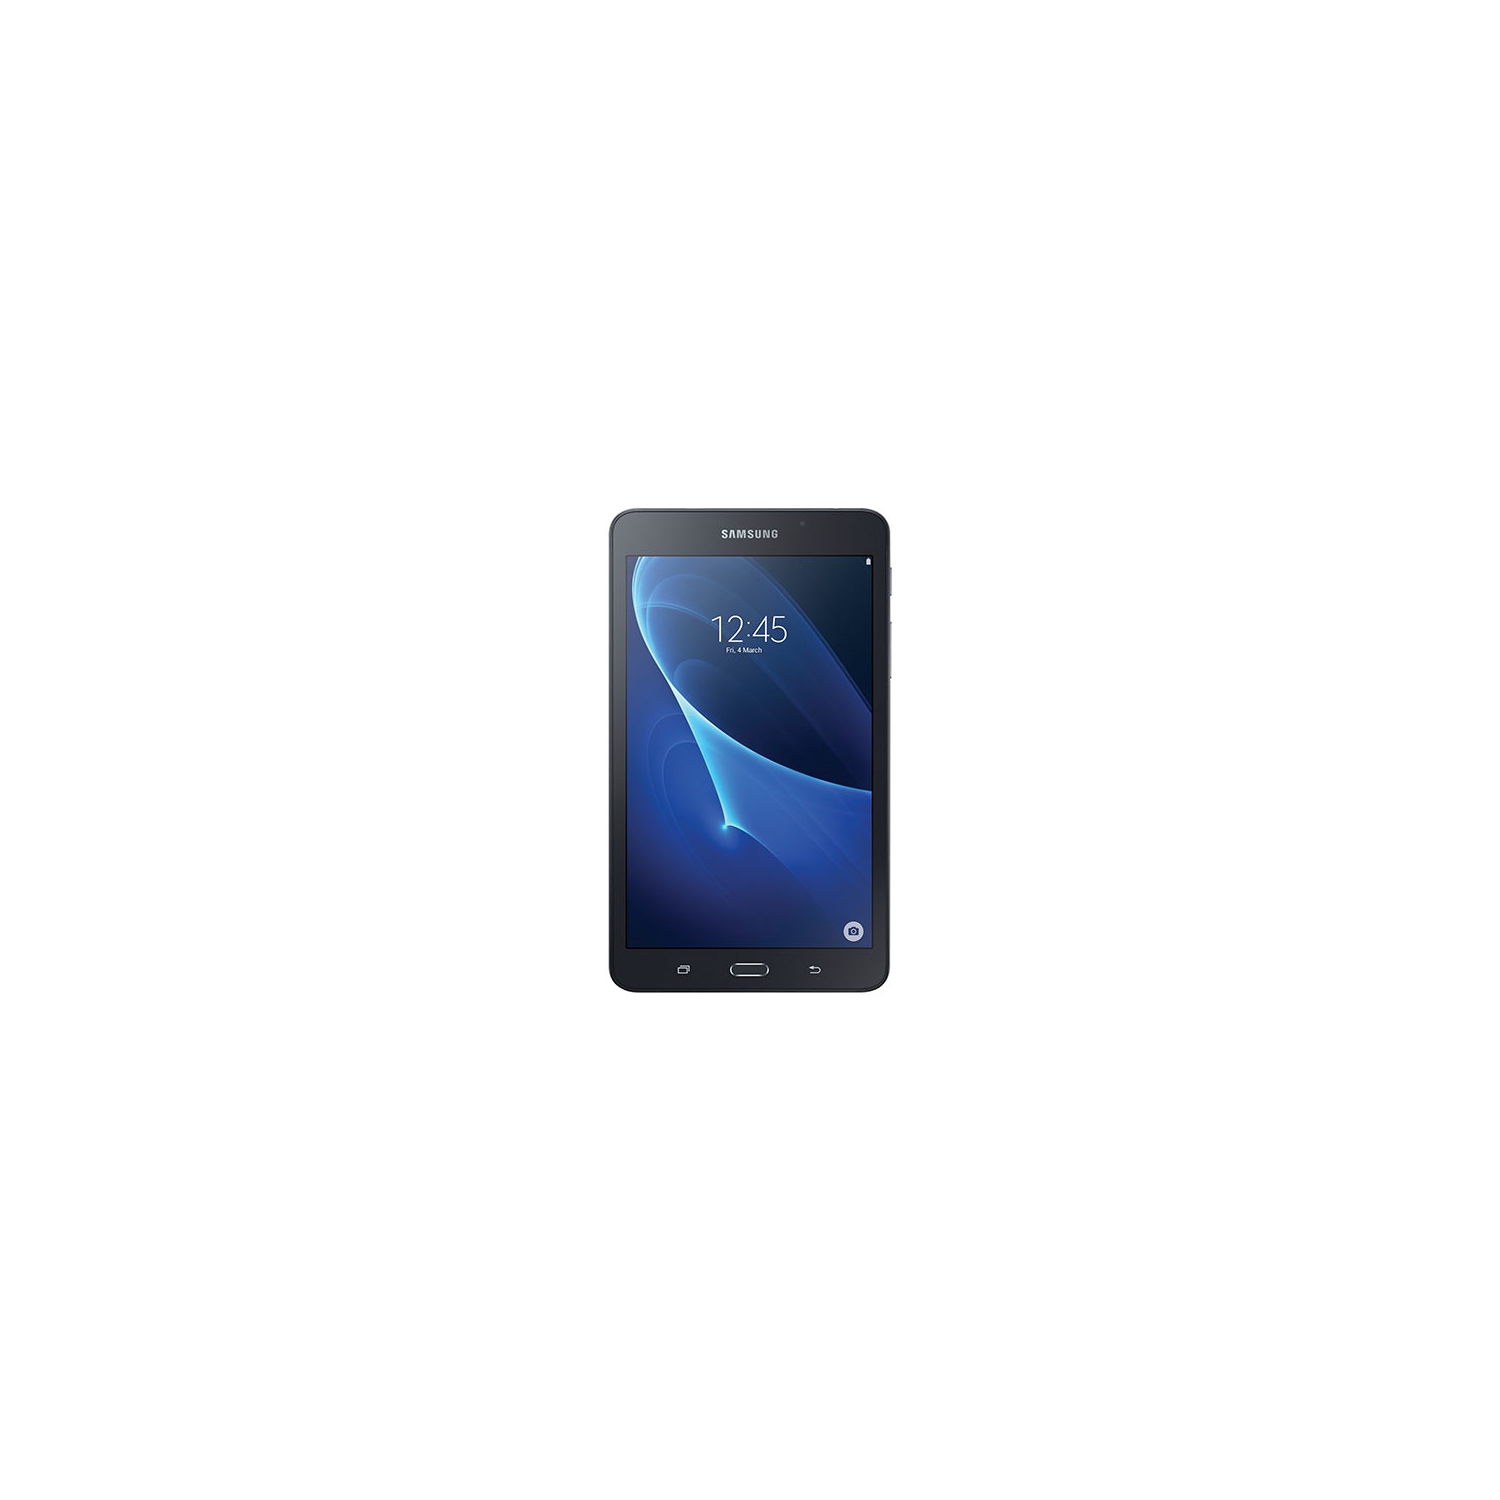 Refurbished (Good) - Samsung Galaxy Tab A 7" 8GB Android 5.1 (Lollipop) Tablet with T-Shark 2A Quad-Core Processor - Black